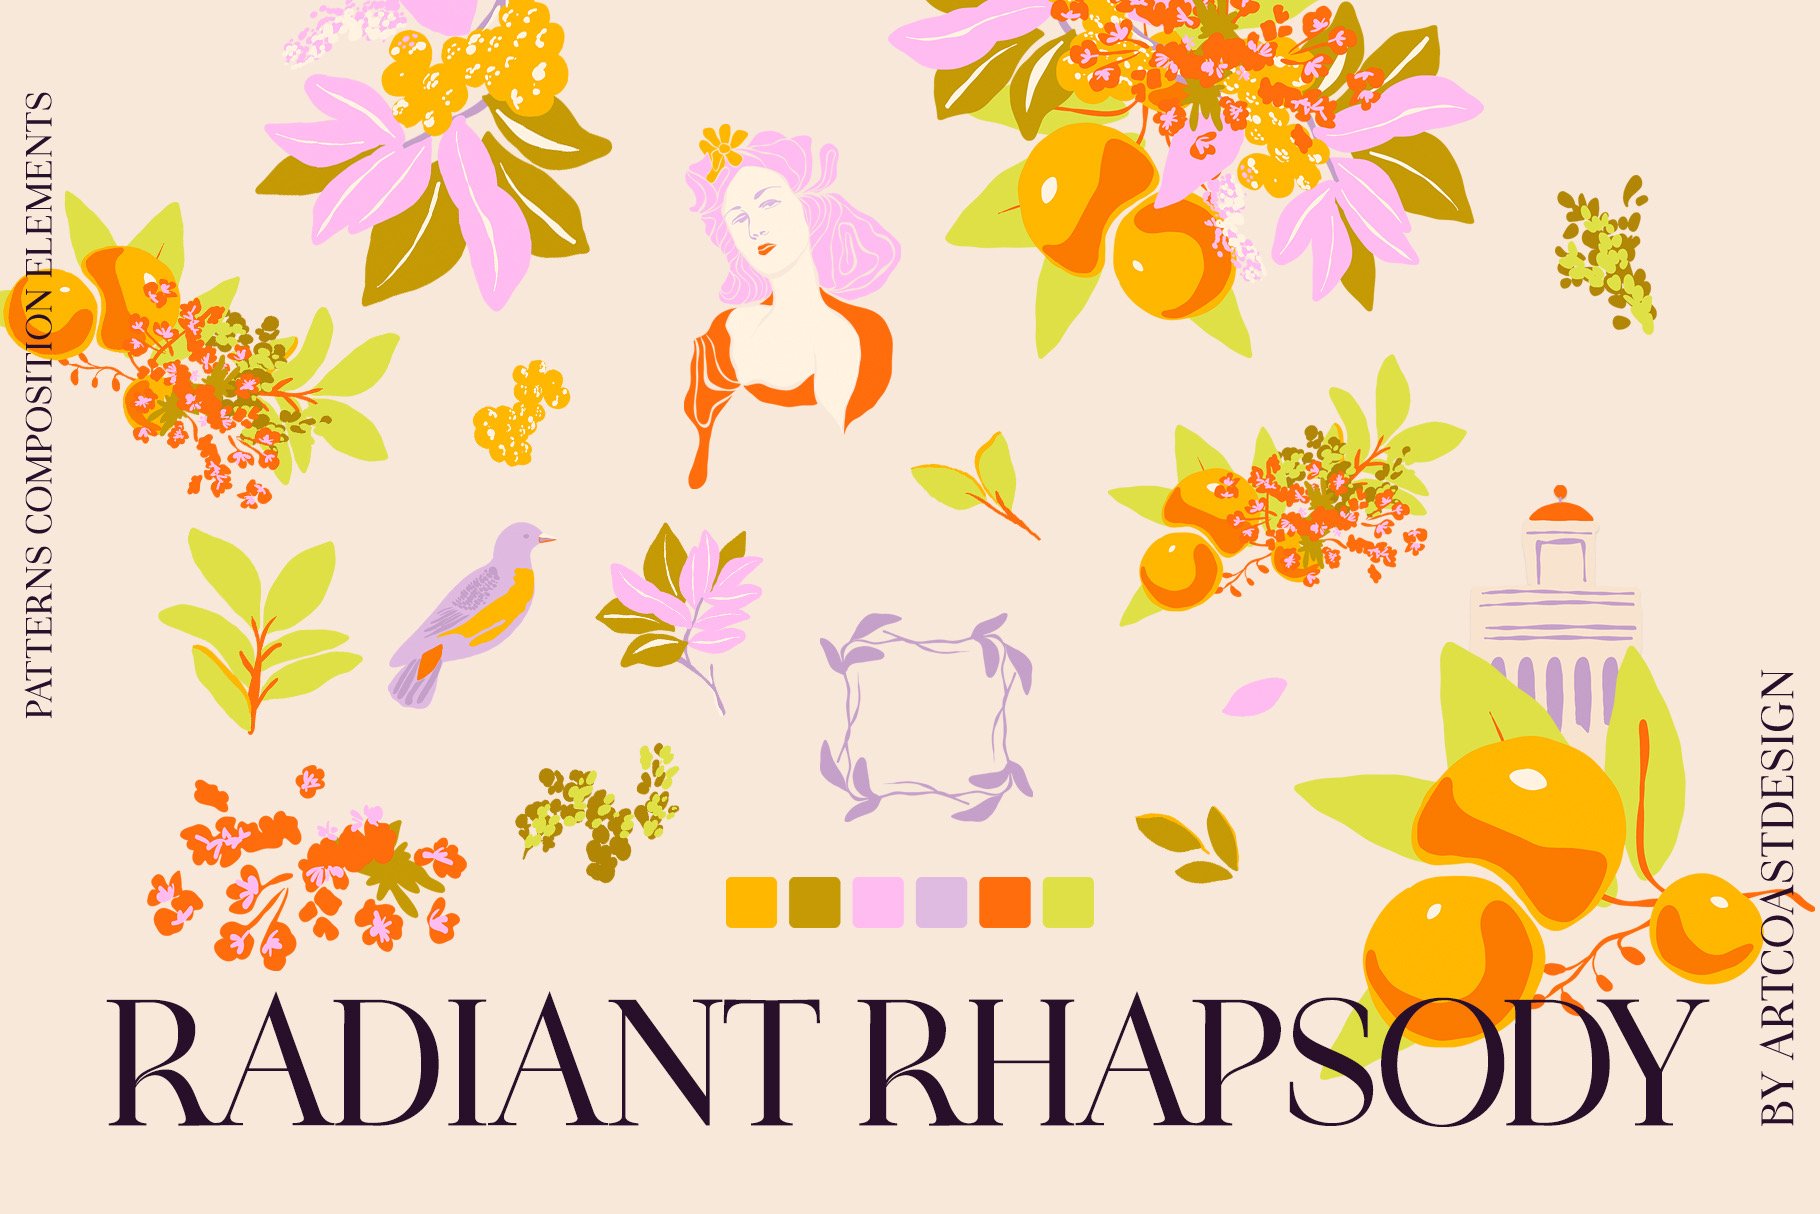 Radiant-Rhapsody-12.jpeg